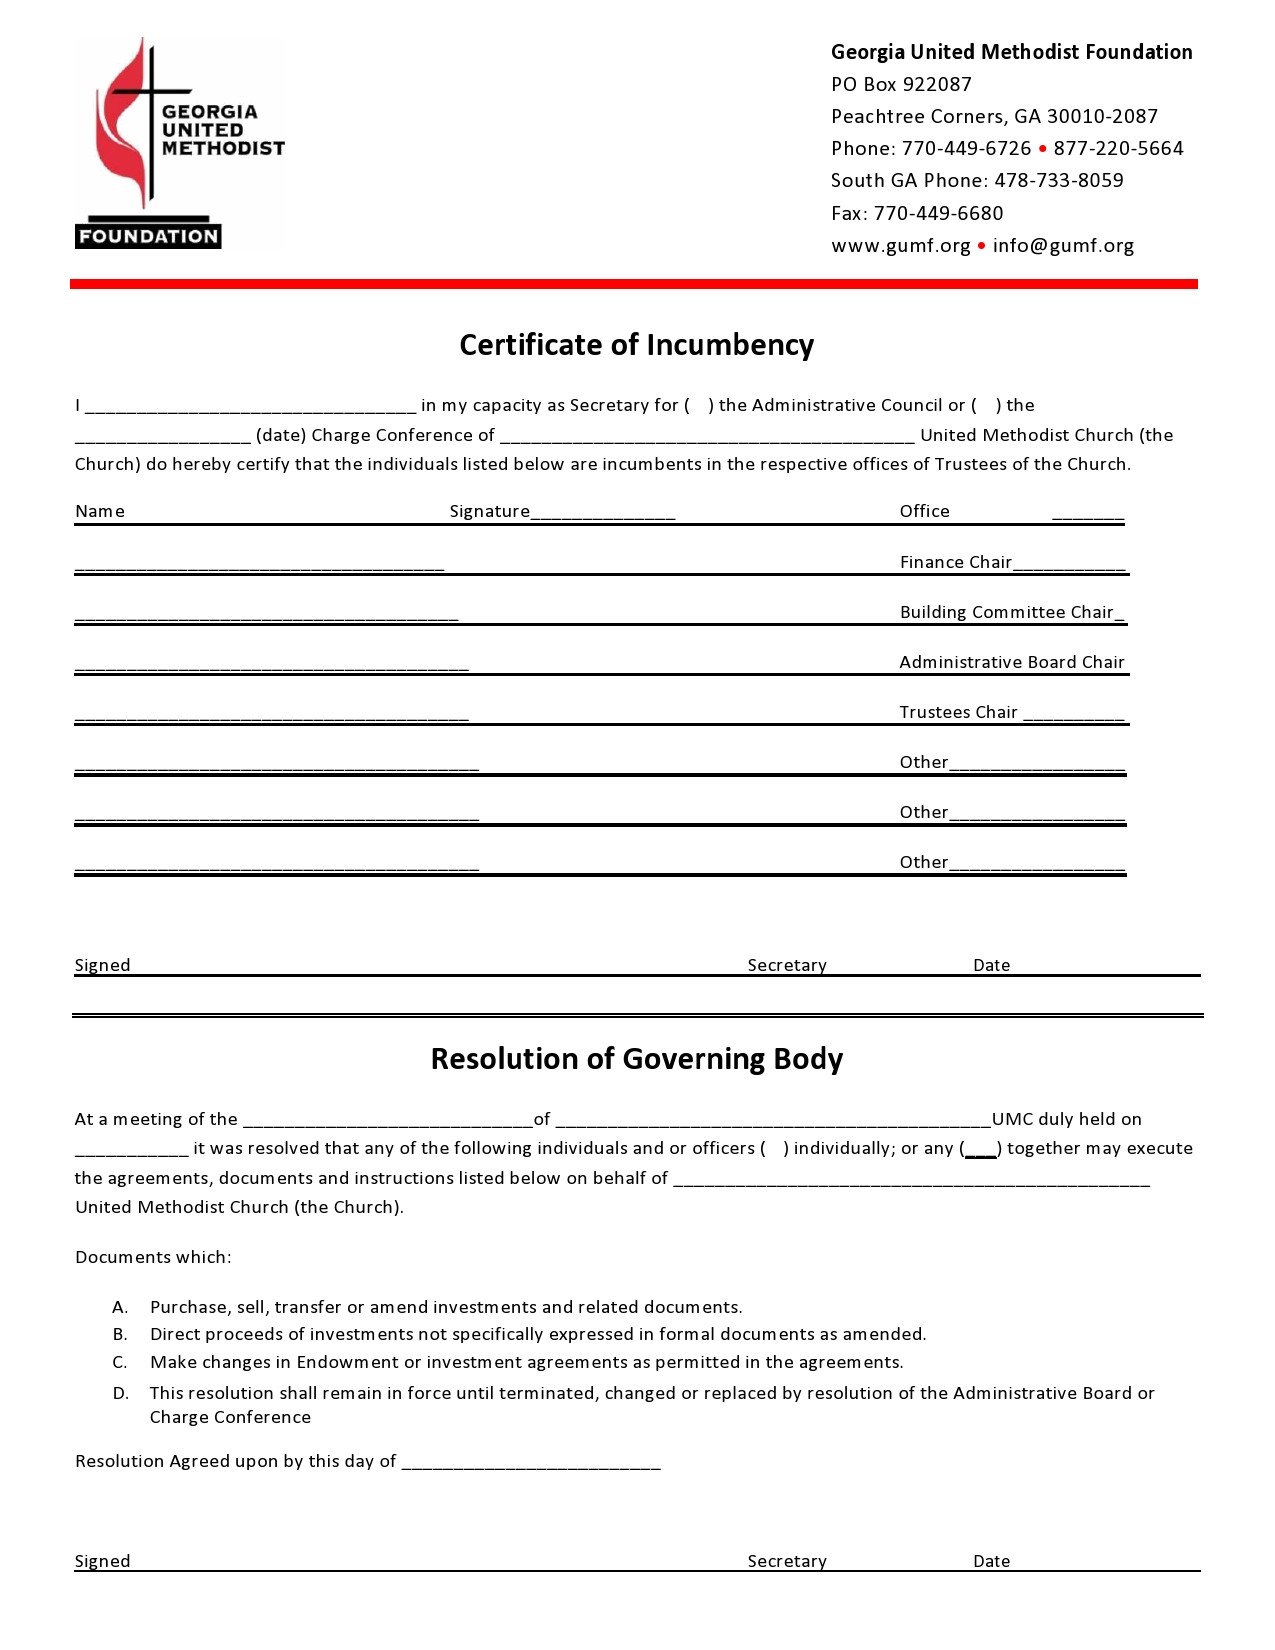 Free certificate of incumbency 23